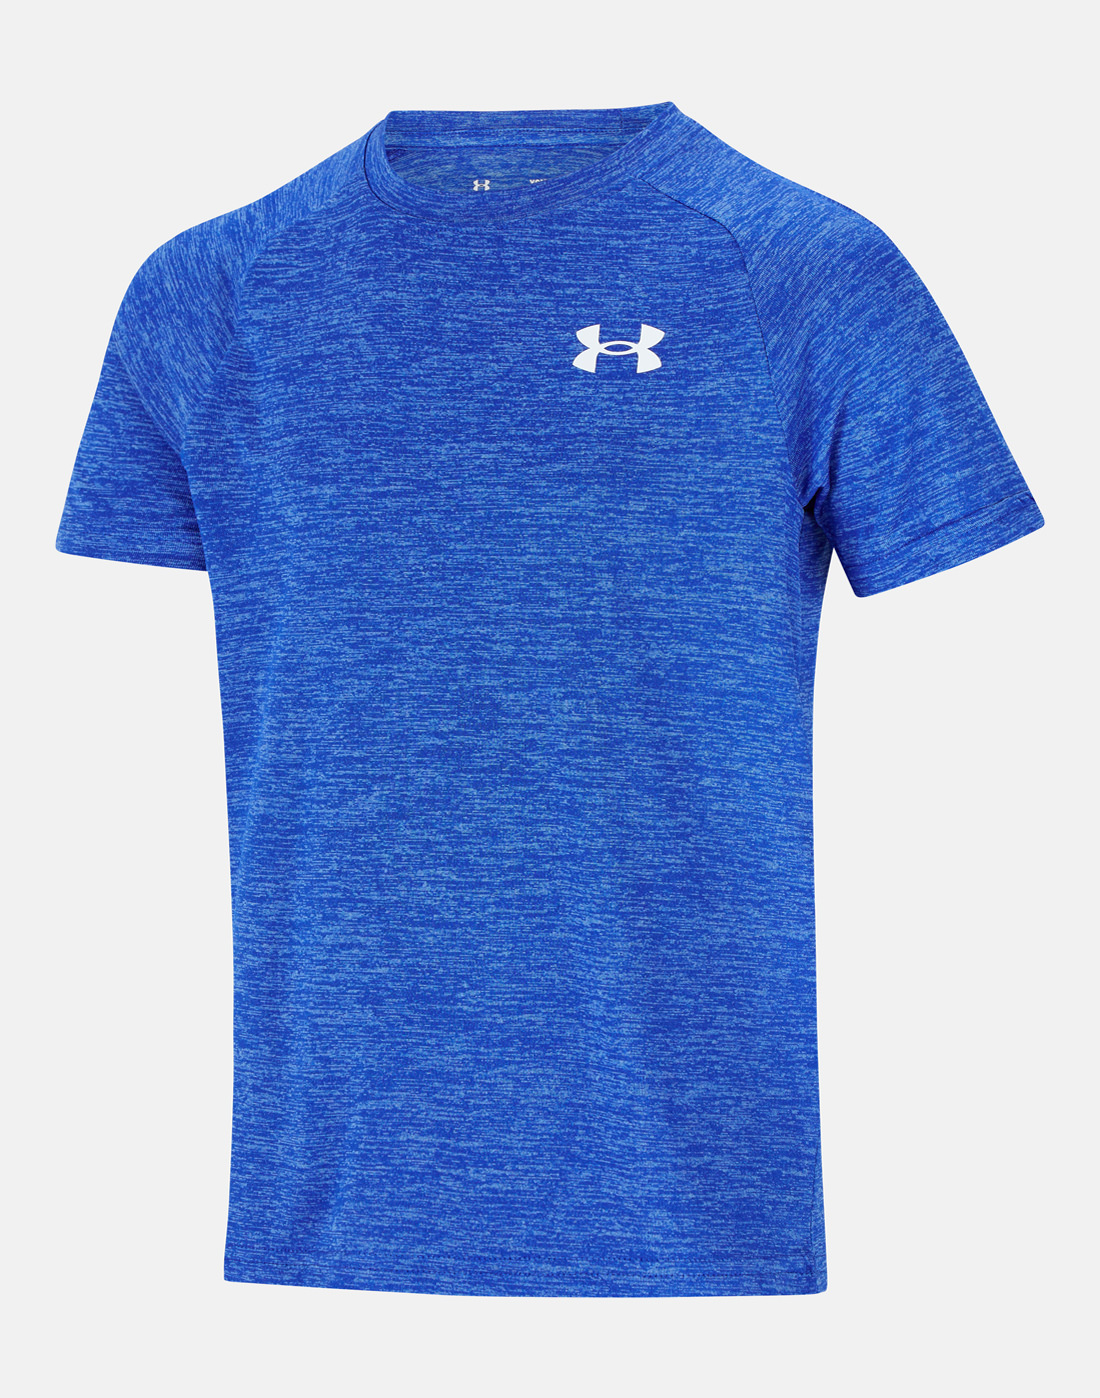 Under Armour Older Boys Tech T-shirt - Blue | Life Style Sports IE